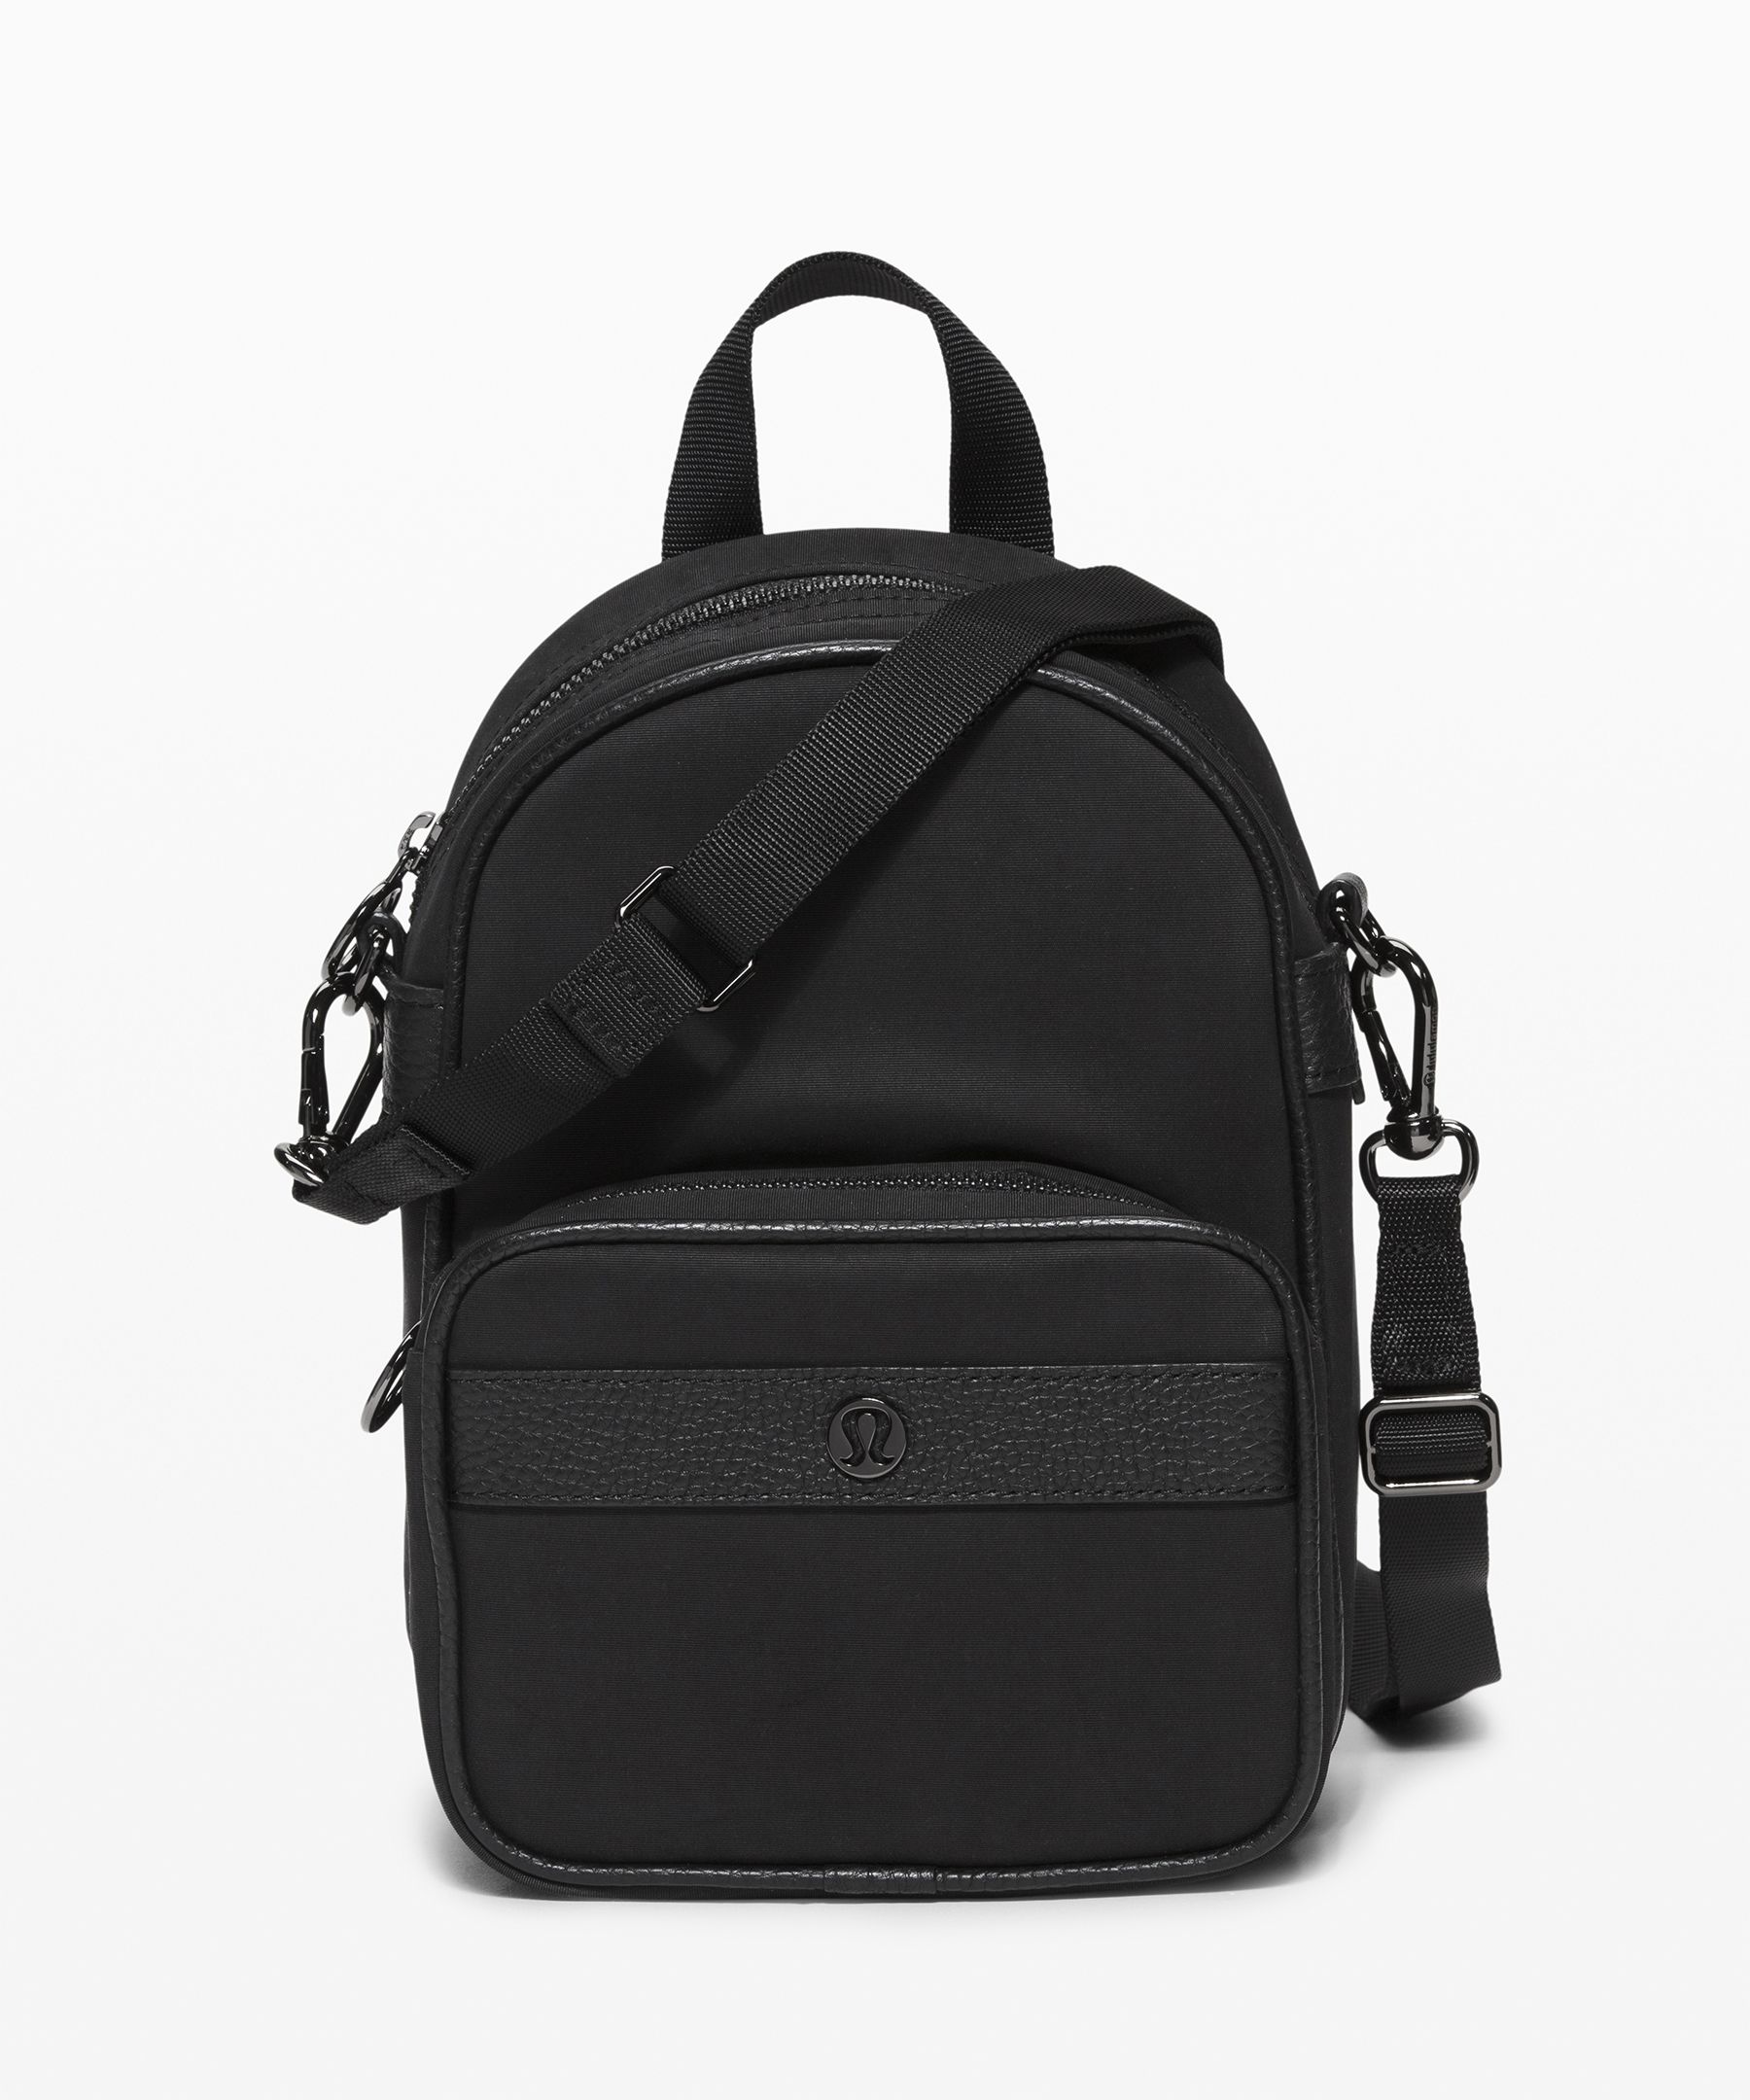 lululemon convertible backpack